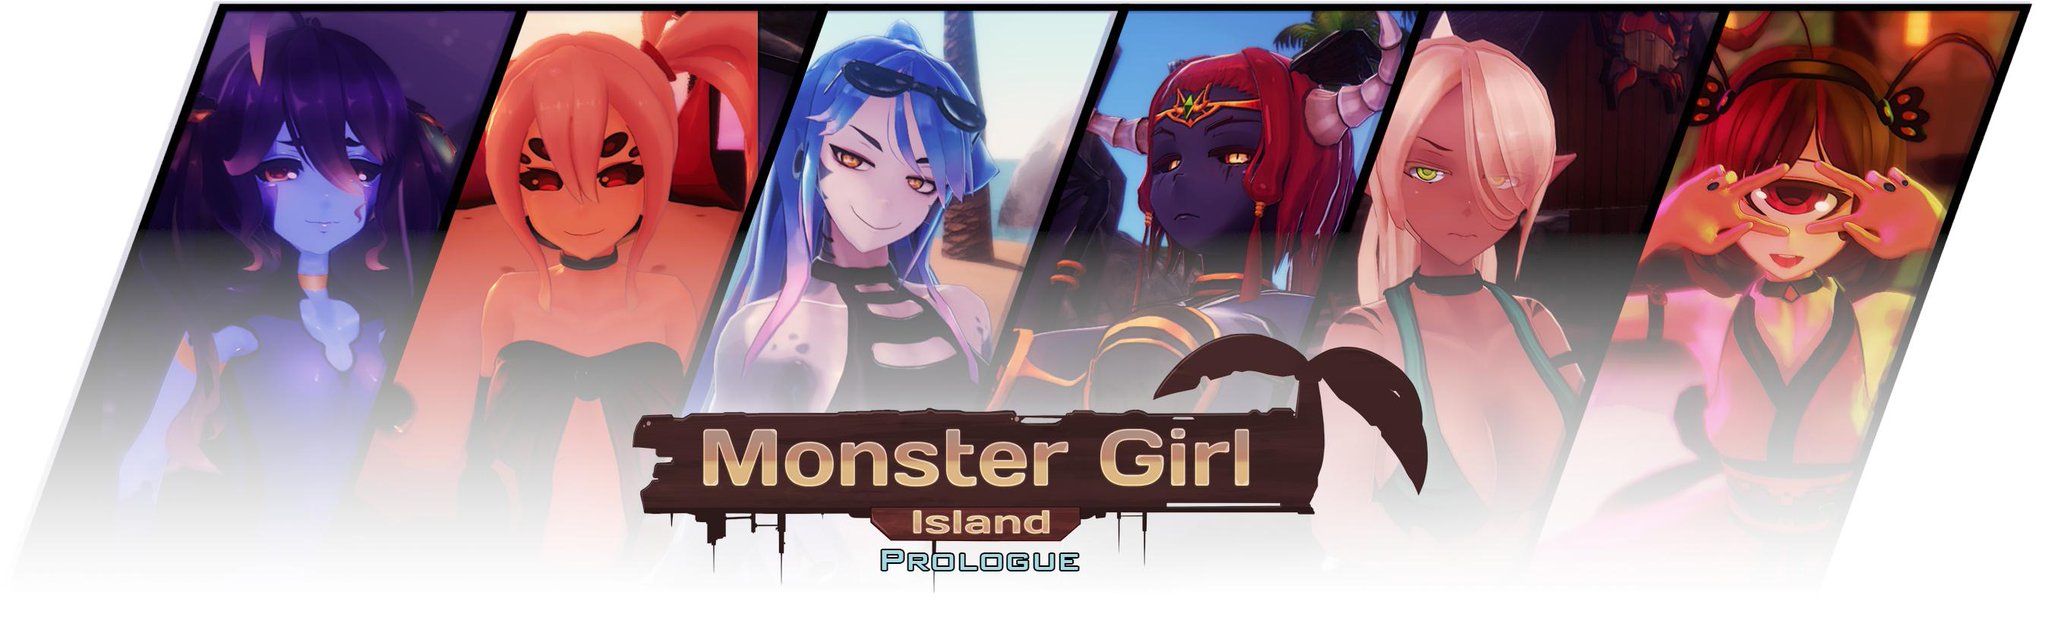 Monster girl island стим фото 52